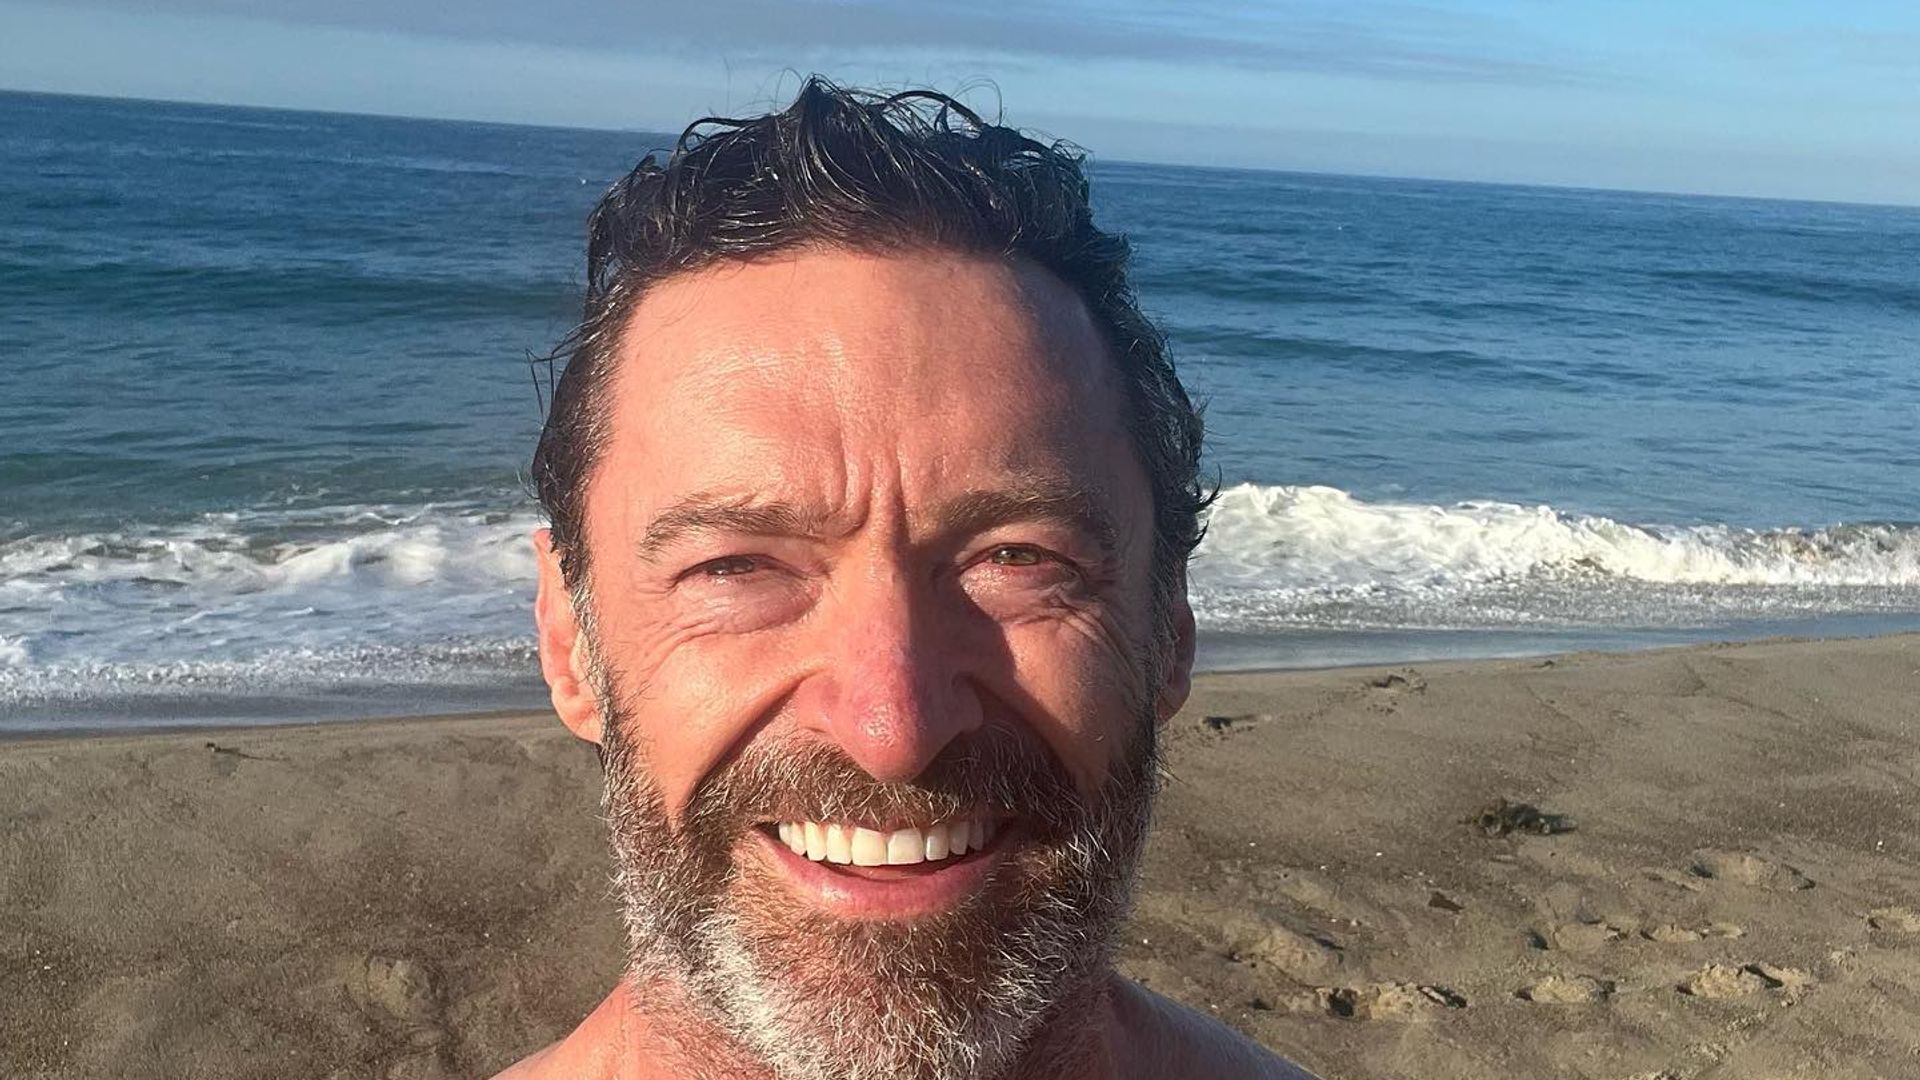 Hugh Jackman shirtless selfie on the beach